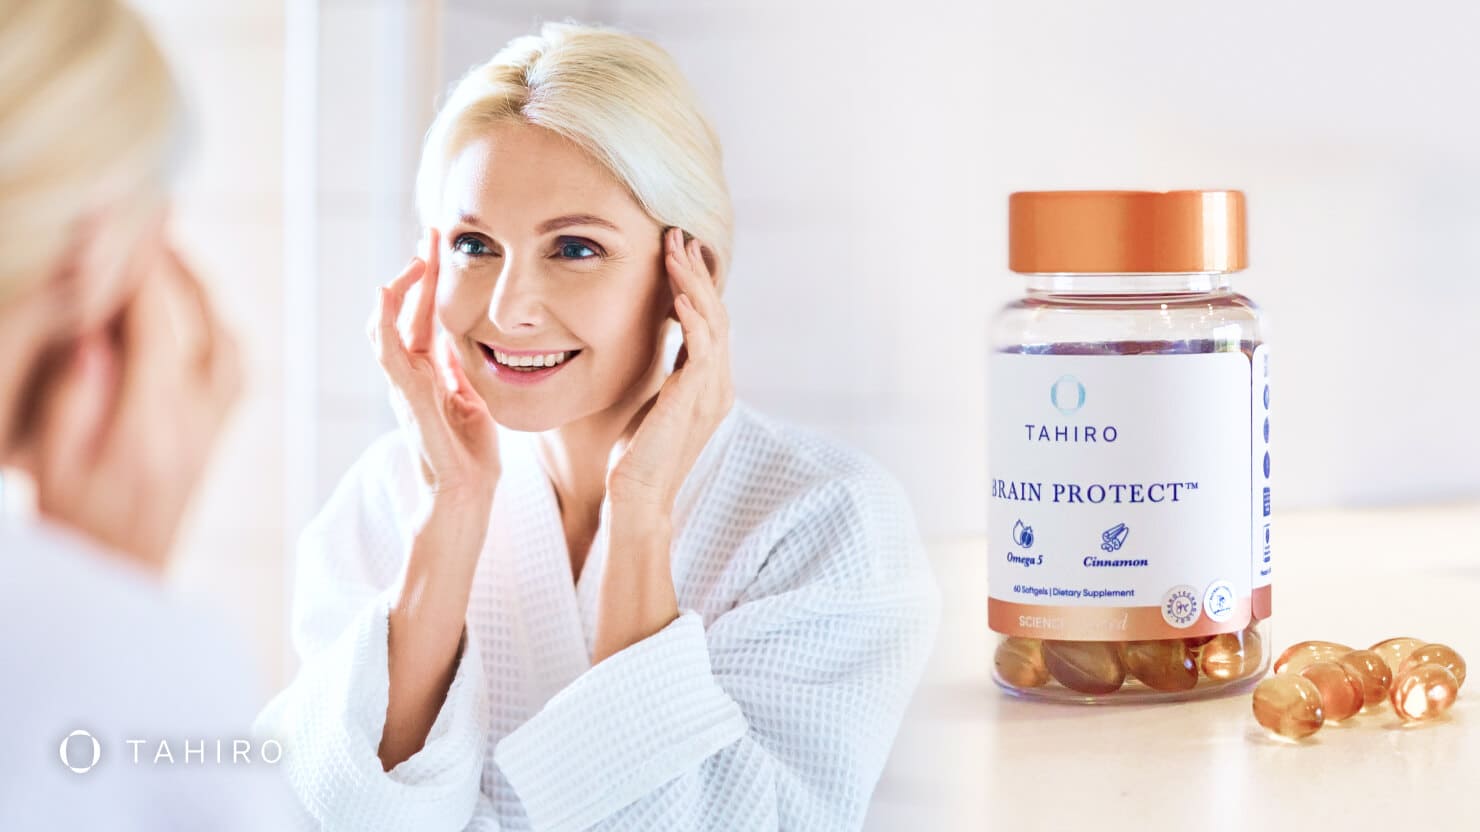 brain protect nano omega 5 supplement for skin health